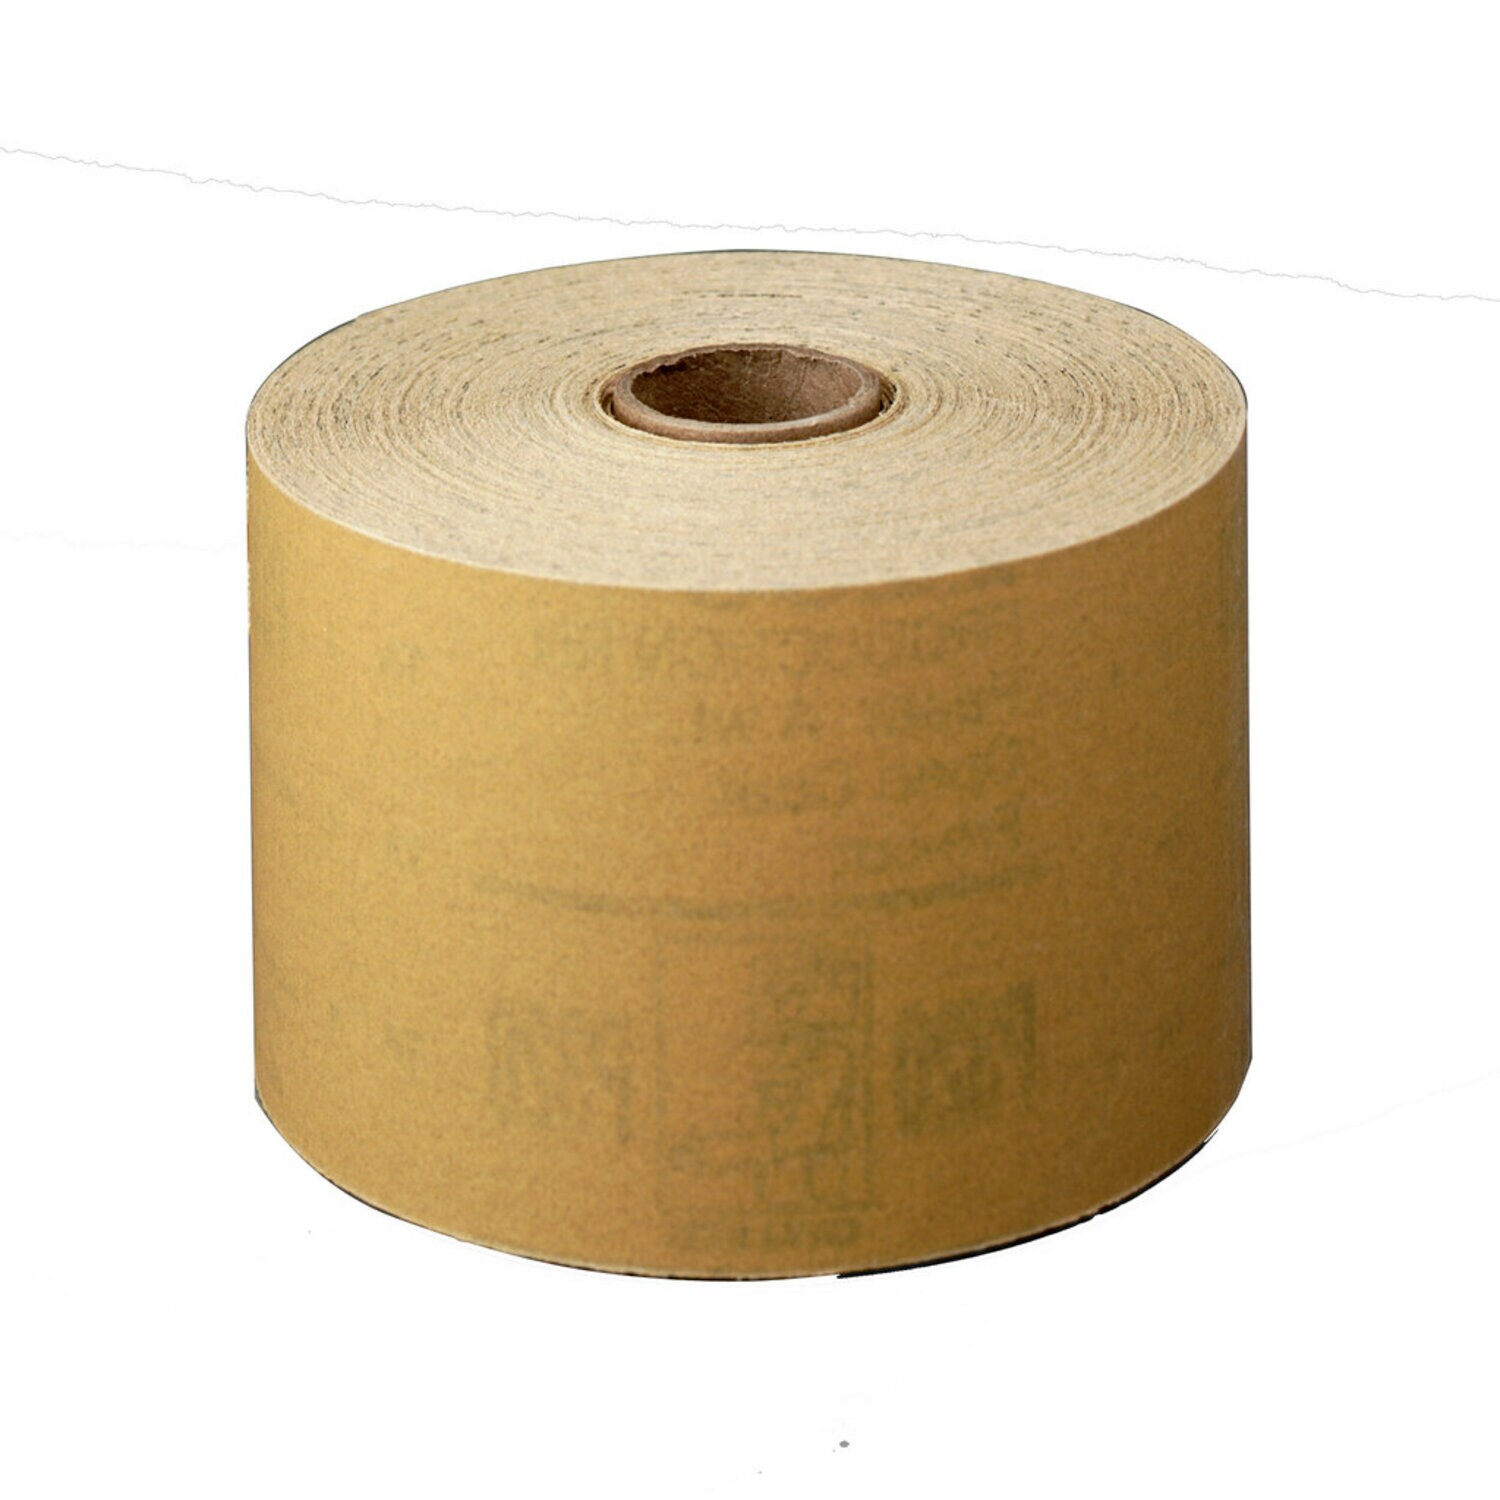 7000028254 - 3M Stikit Gold Sheet Roll, 02590, P400, 2-3/4 in x 45 yd, 10 rolls per
case